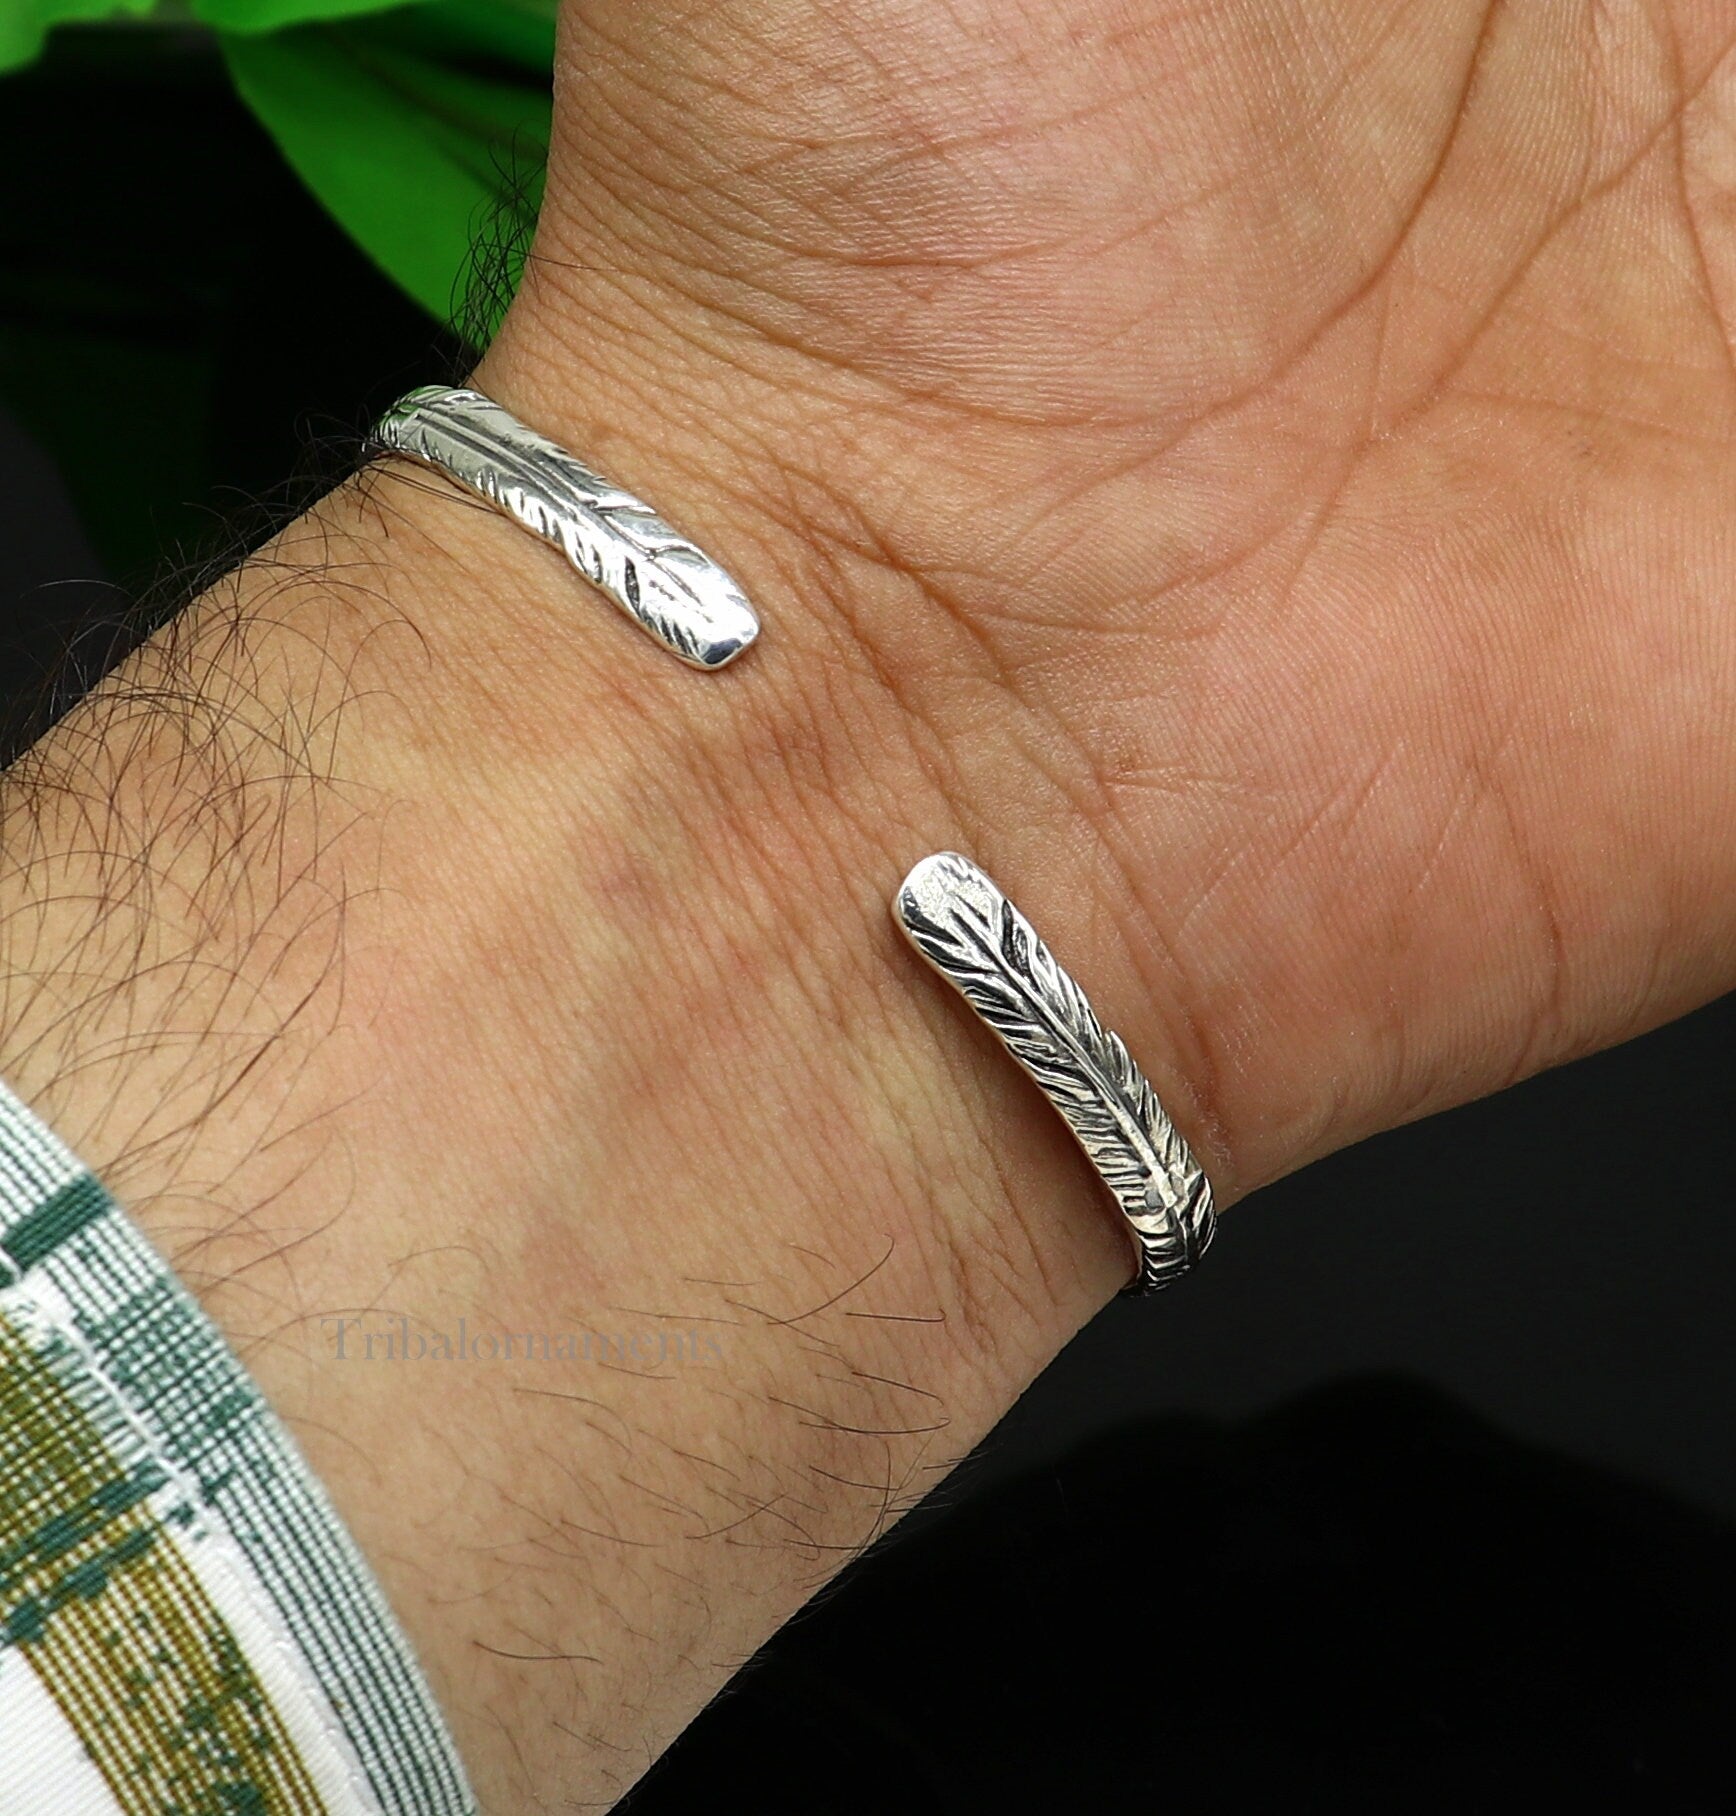 925 sterling silver vintage antique feather design handmade adjustable cuff bangle bracelet kada unisex men's or girl's jewelry nsk370 - TRIBAL ORNAMENTS